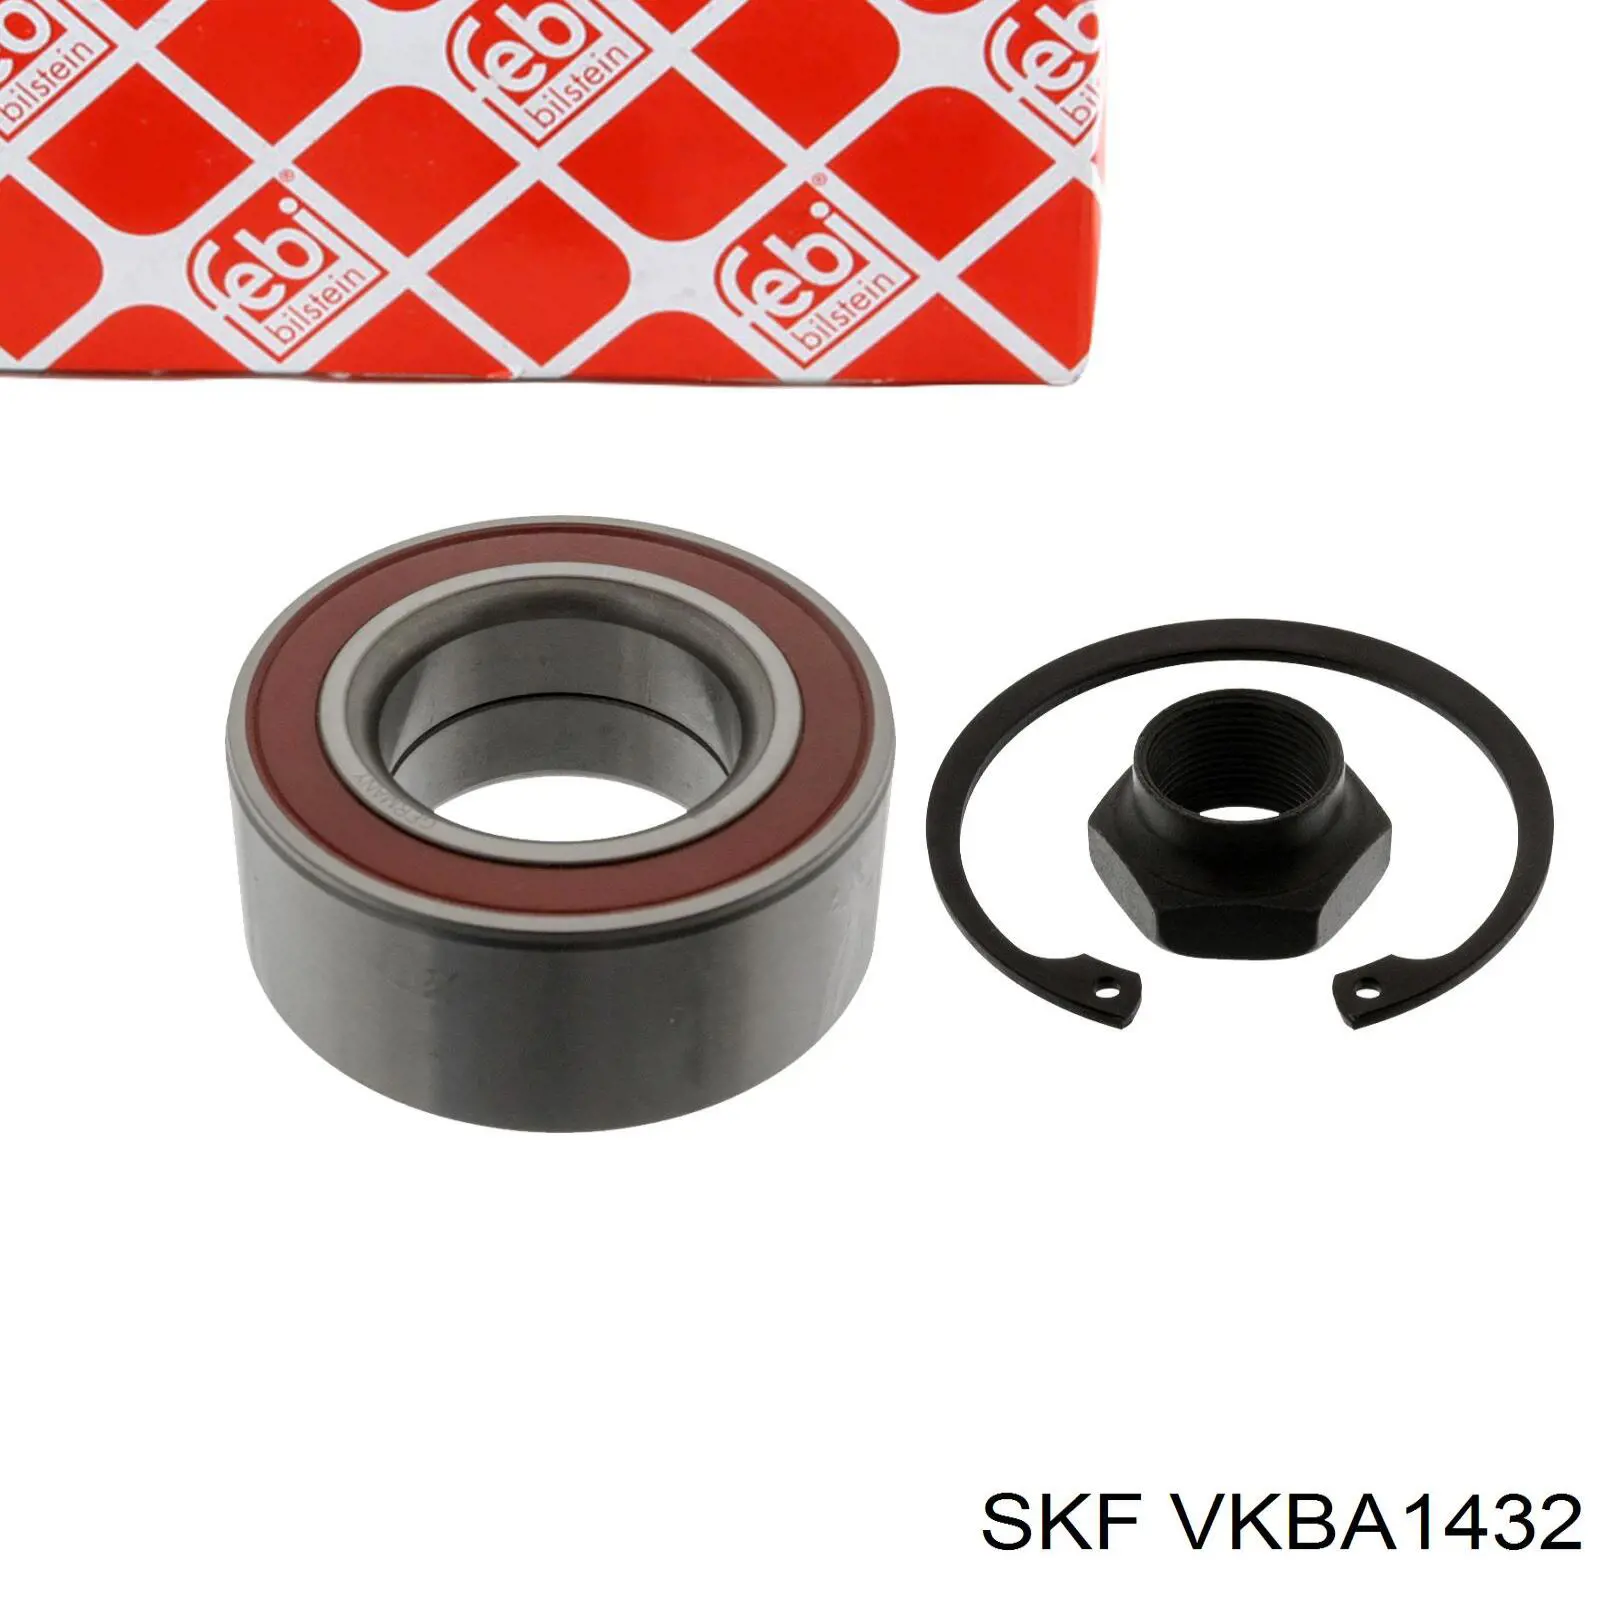 VKBA1432 SKF cojinete de rueda delantero